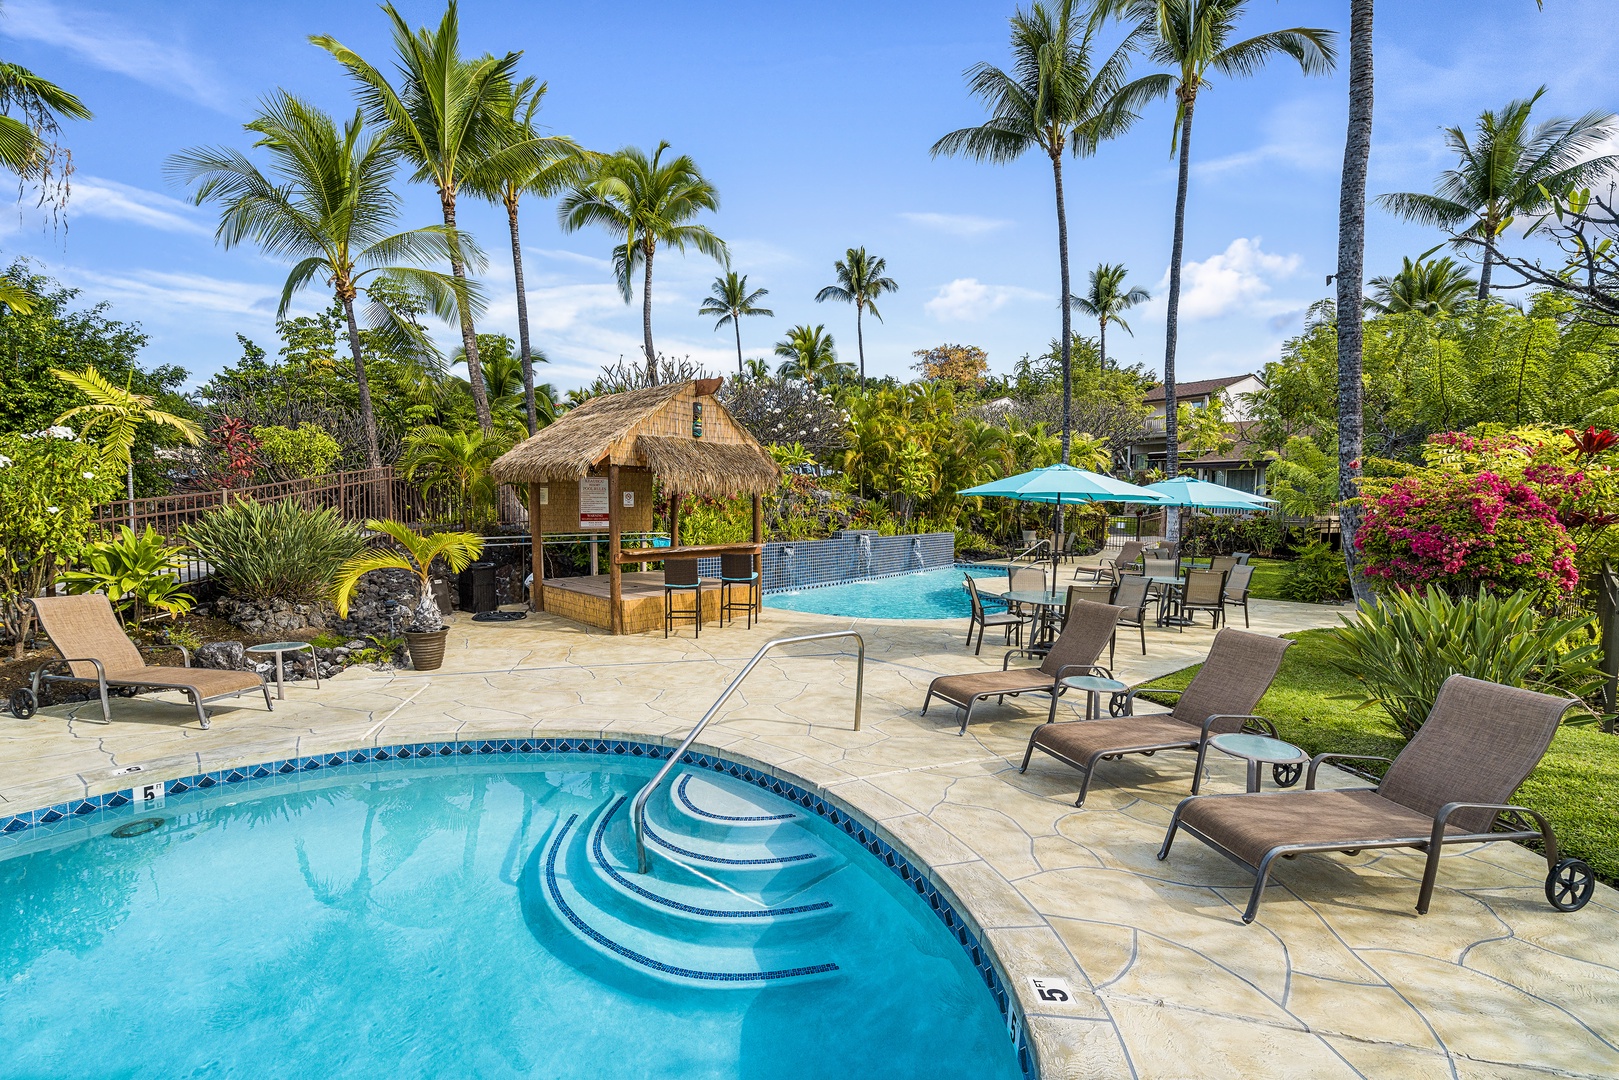 Kailua Kona Vacation Rentals, Keauhou Resort 104 - Showcasing the 2 pools at Keauhou Resort!